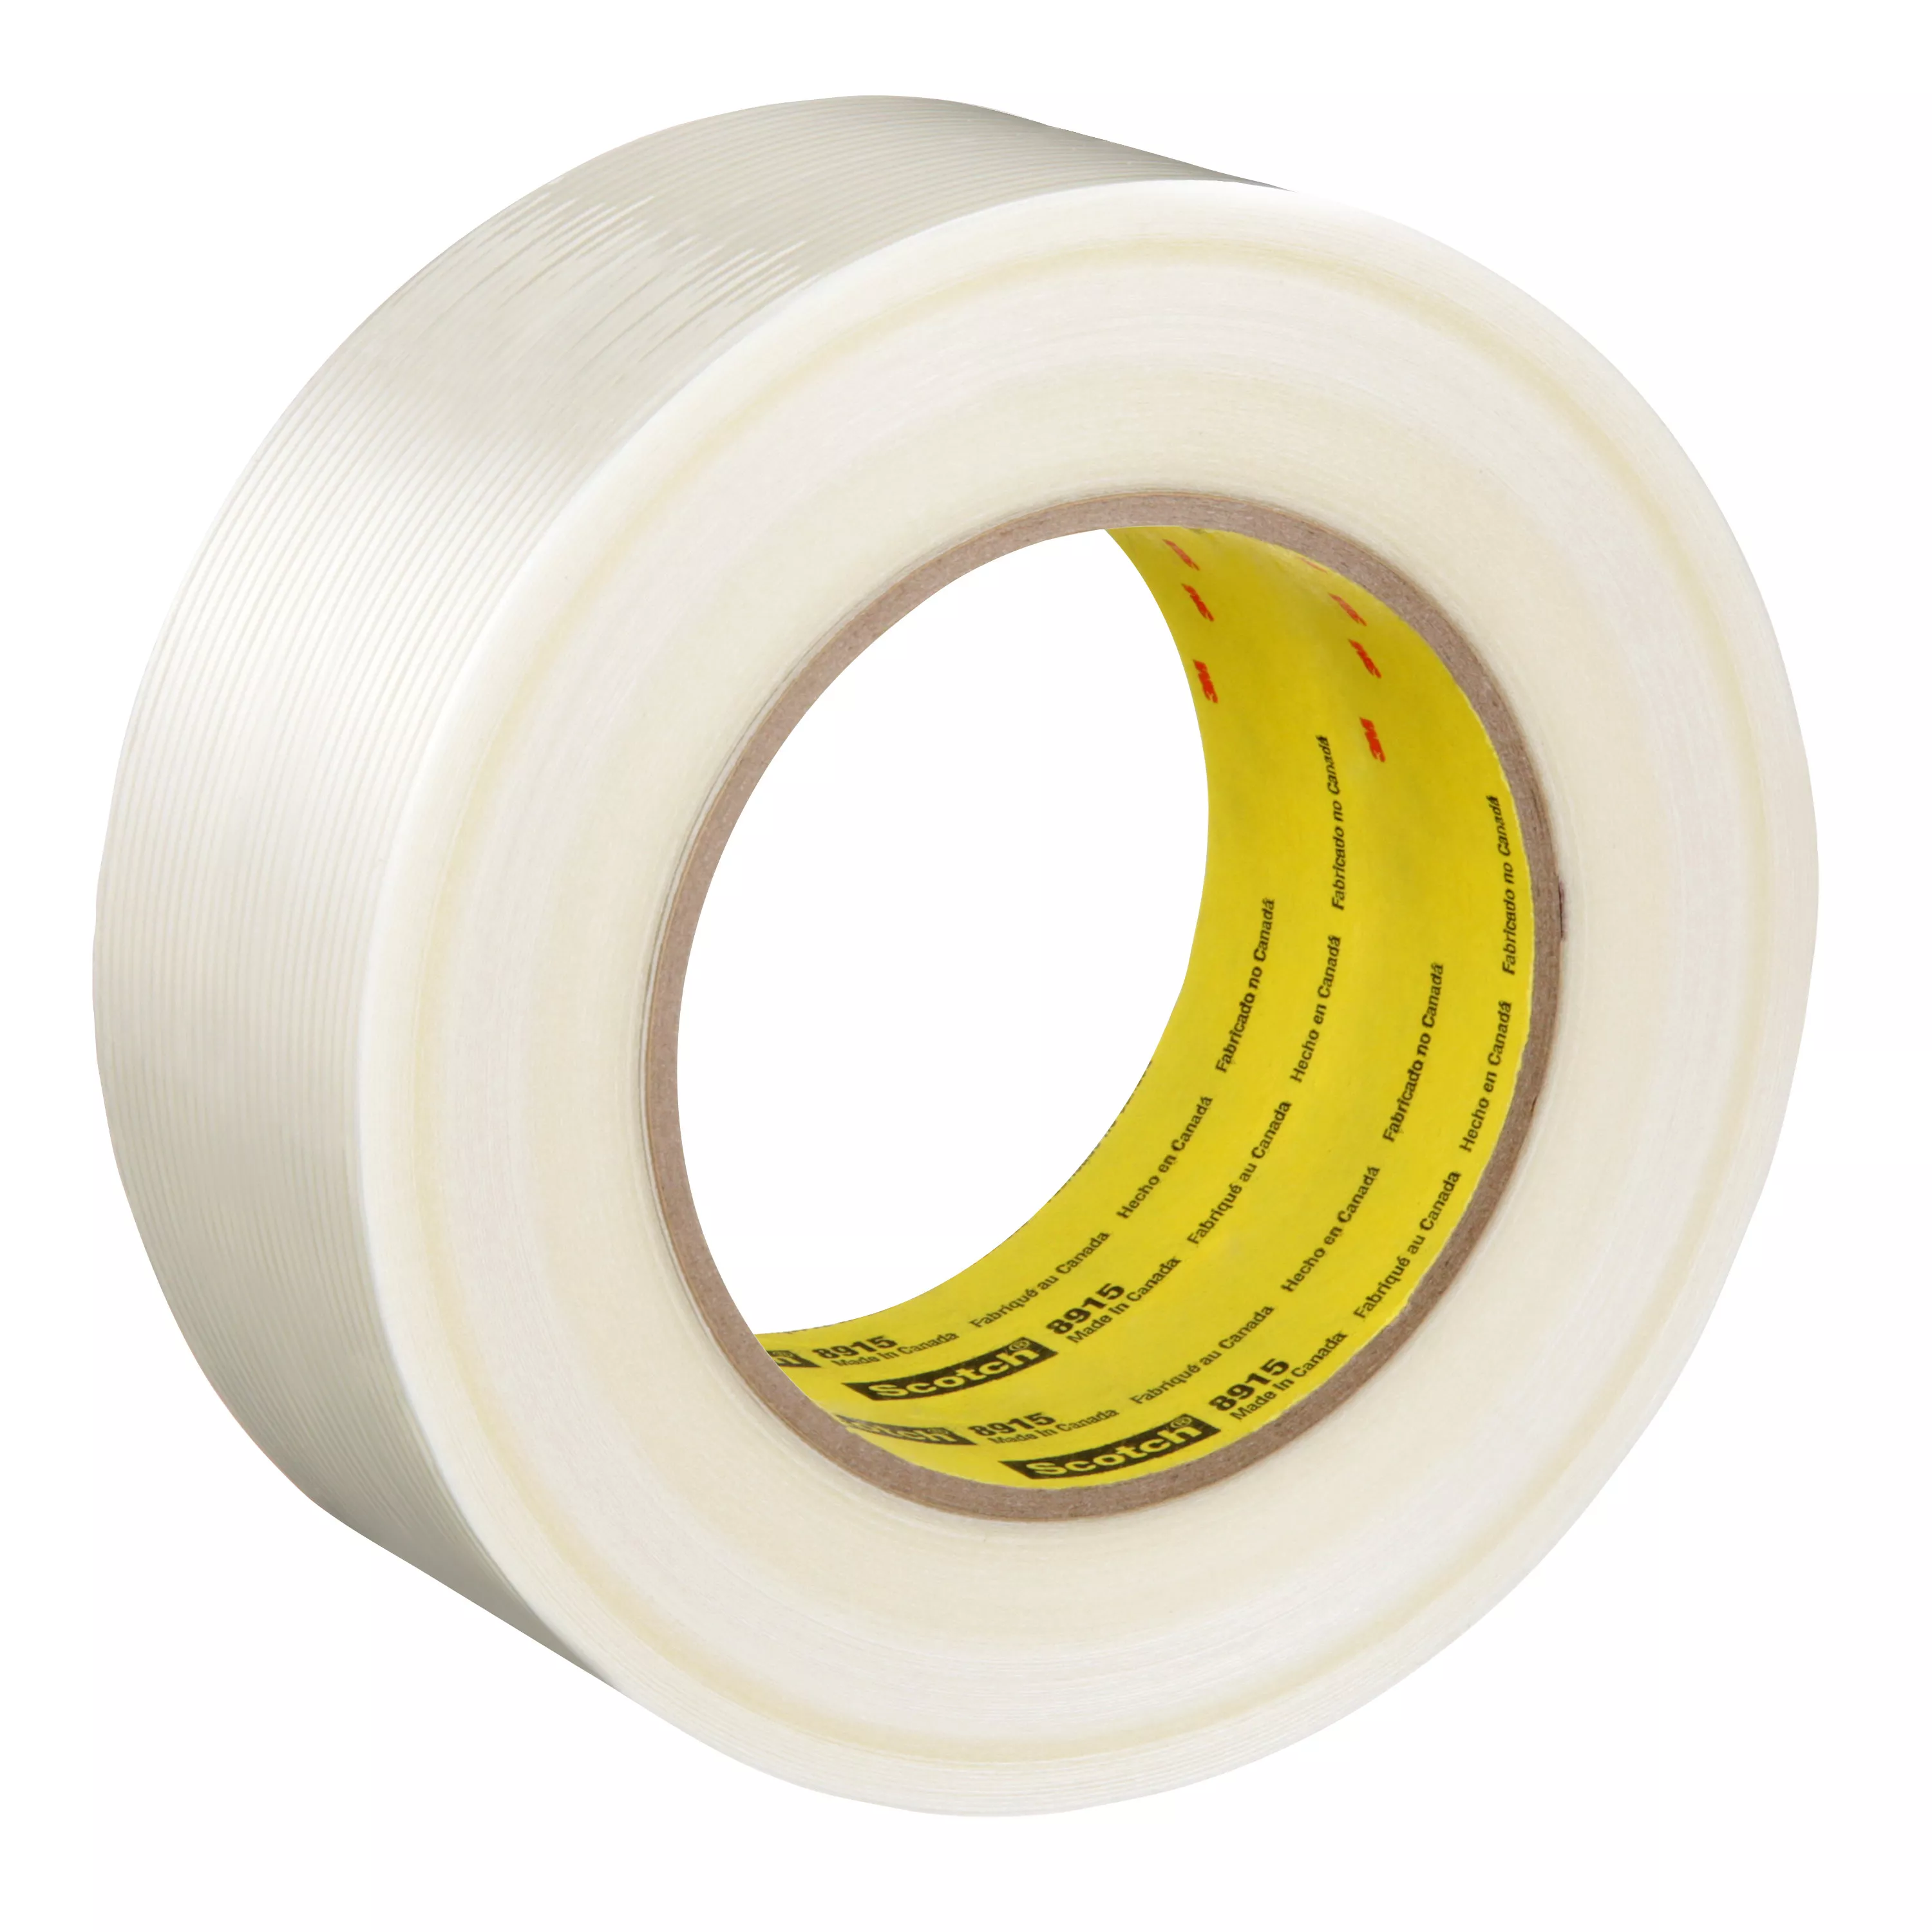 Scotch® Filament Tape Clean Removal 8915, 48 mm x 55 m, 6 mil, 24
Roll/Case